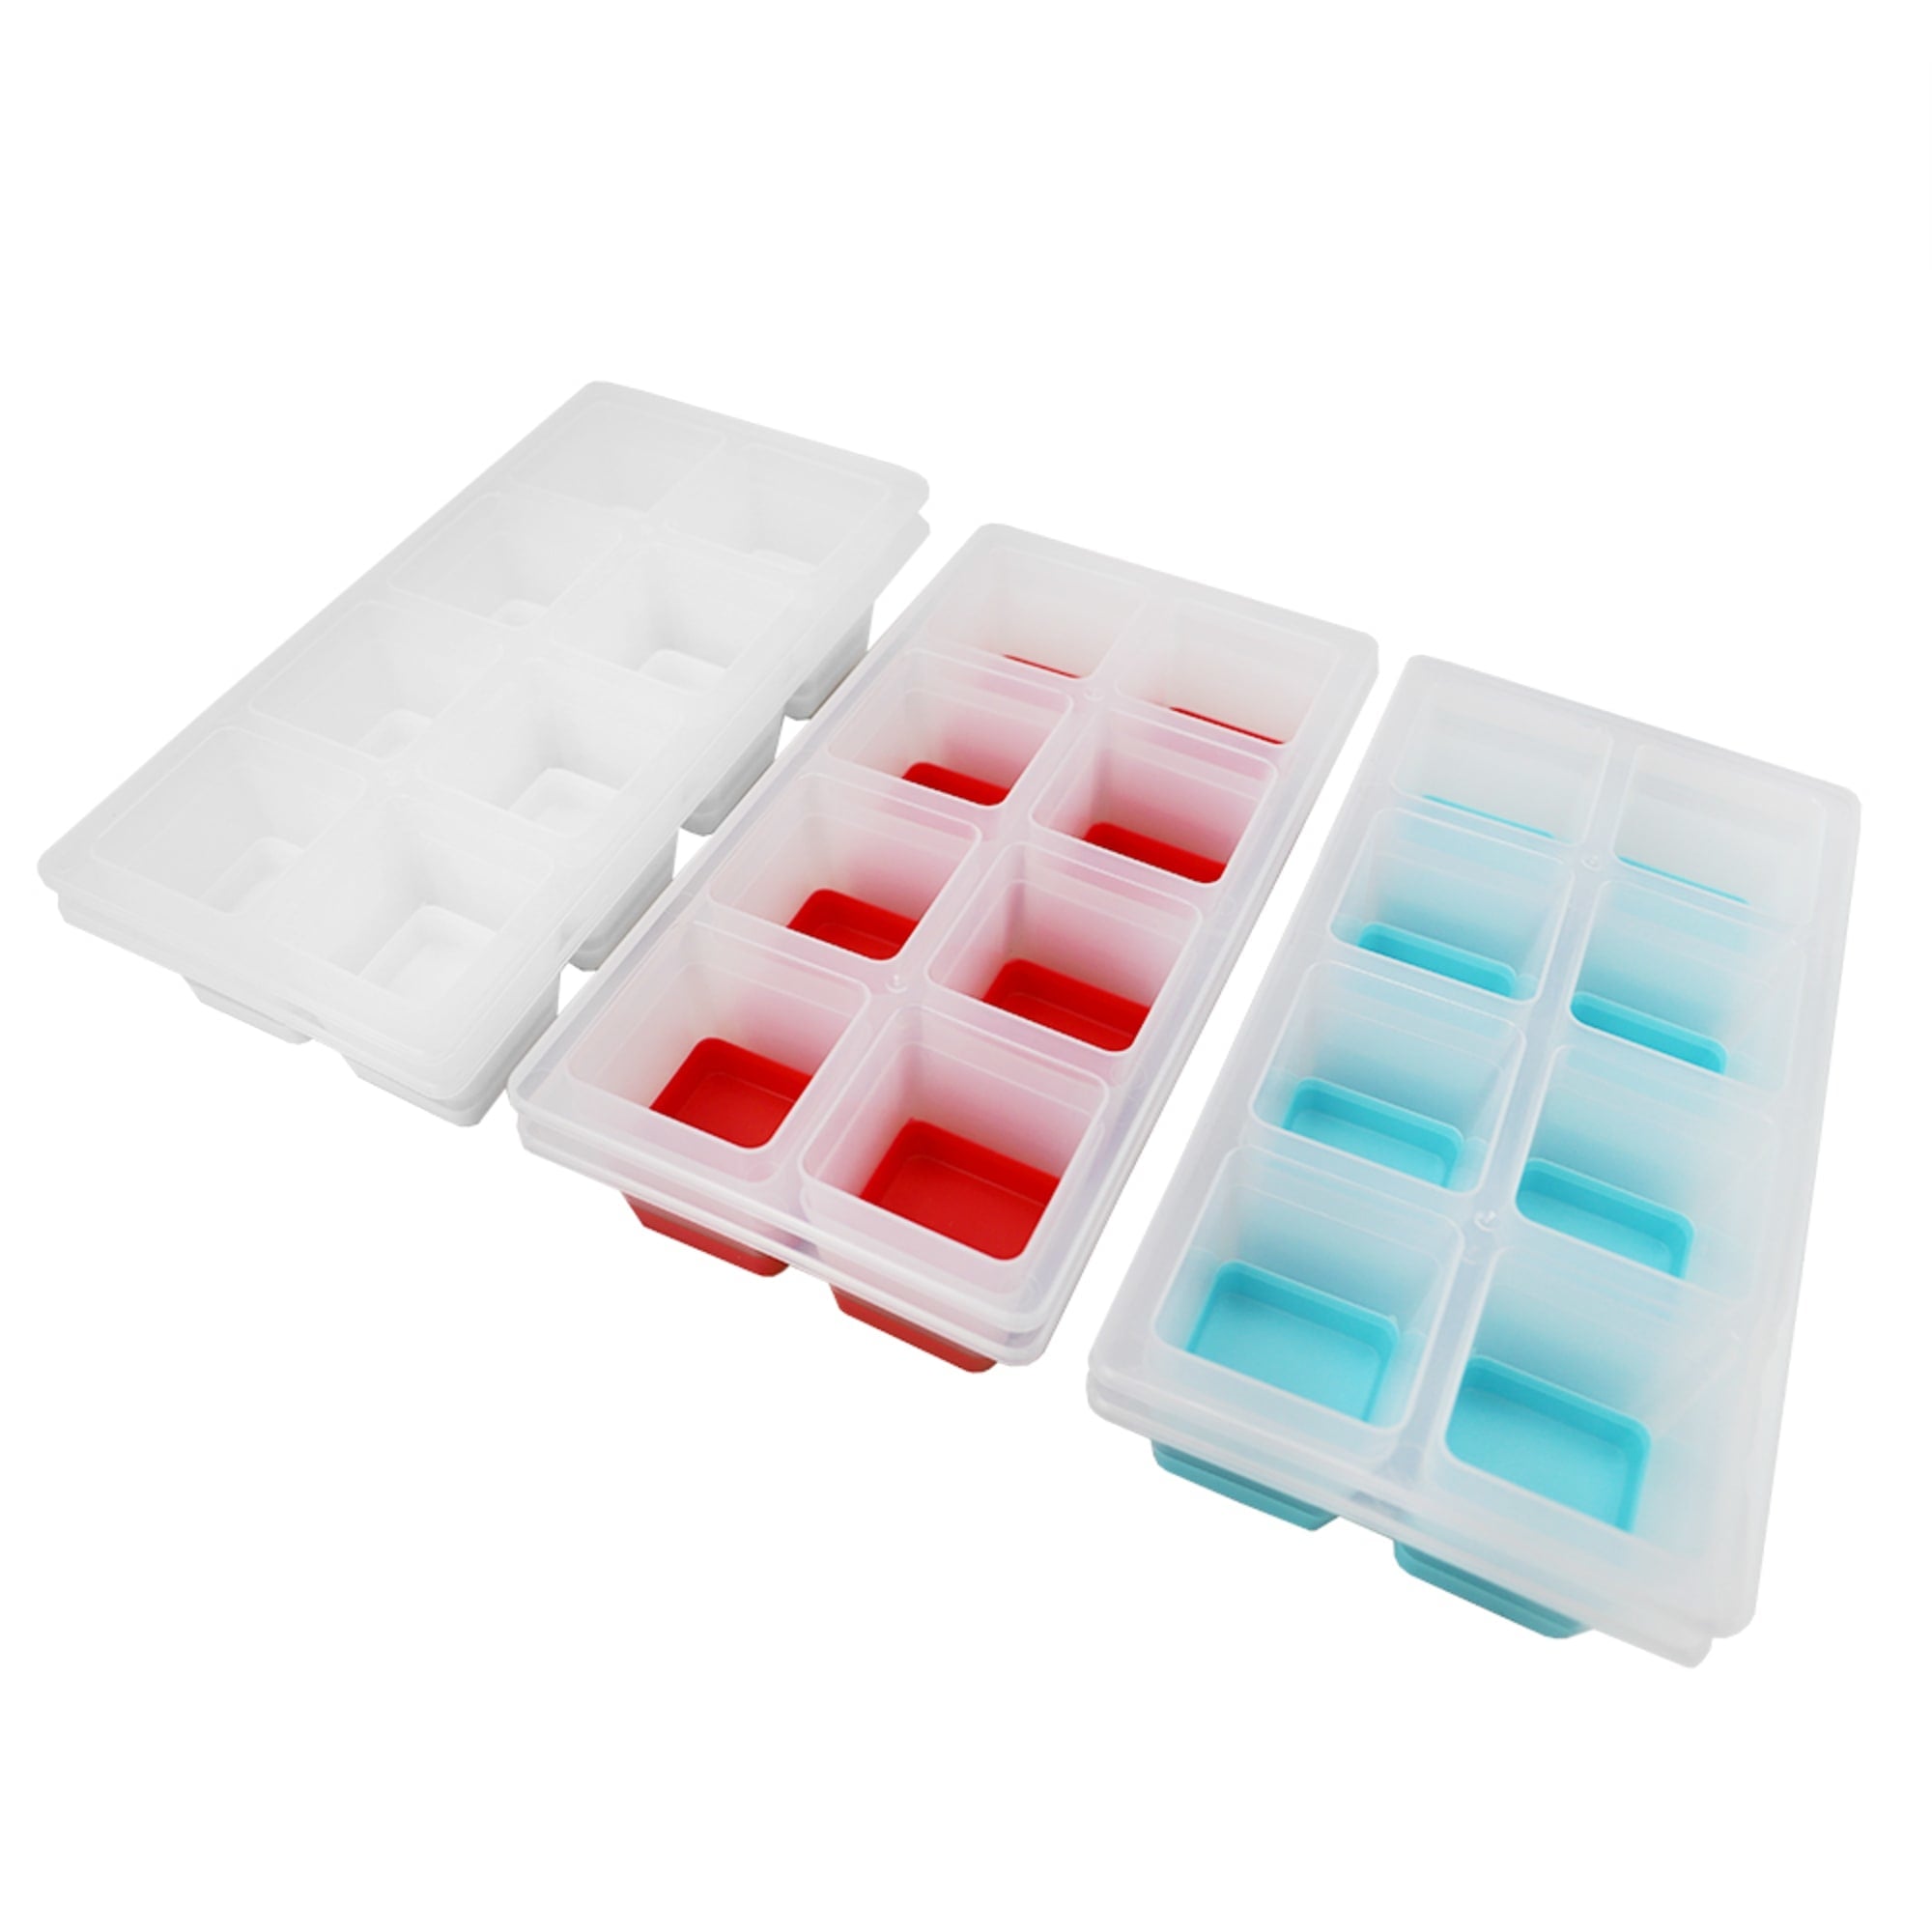 Home Basics 2 Pack Mini Ice Cube Tray, KITCHEN ORGANIZATION